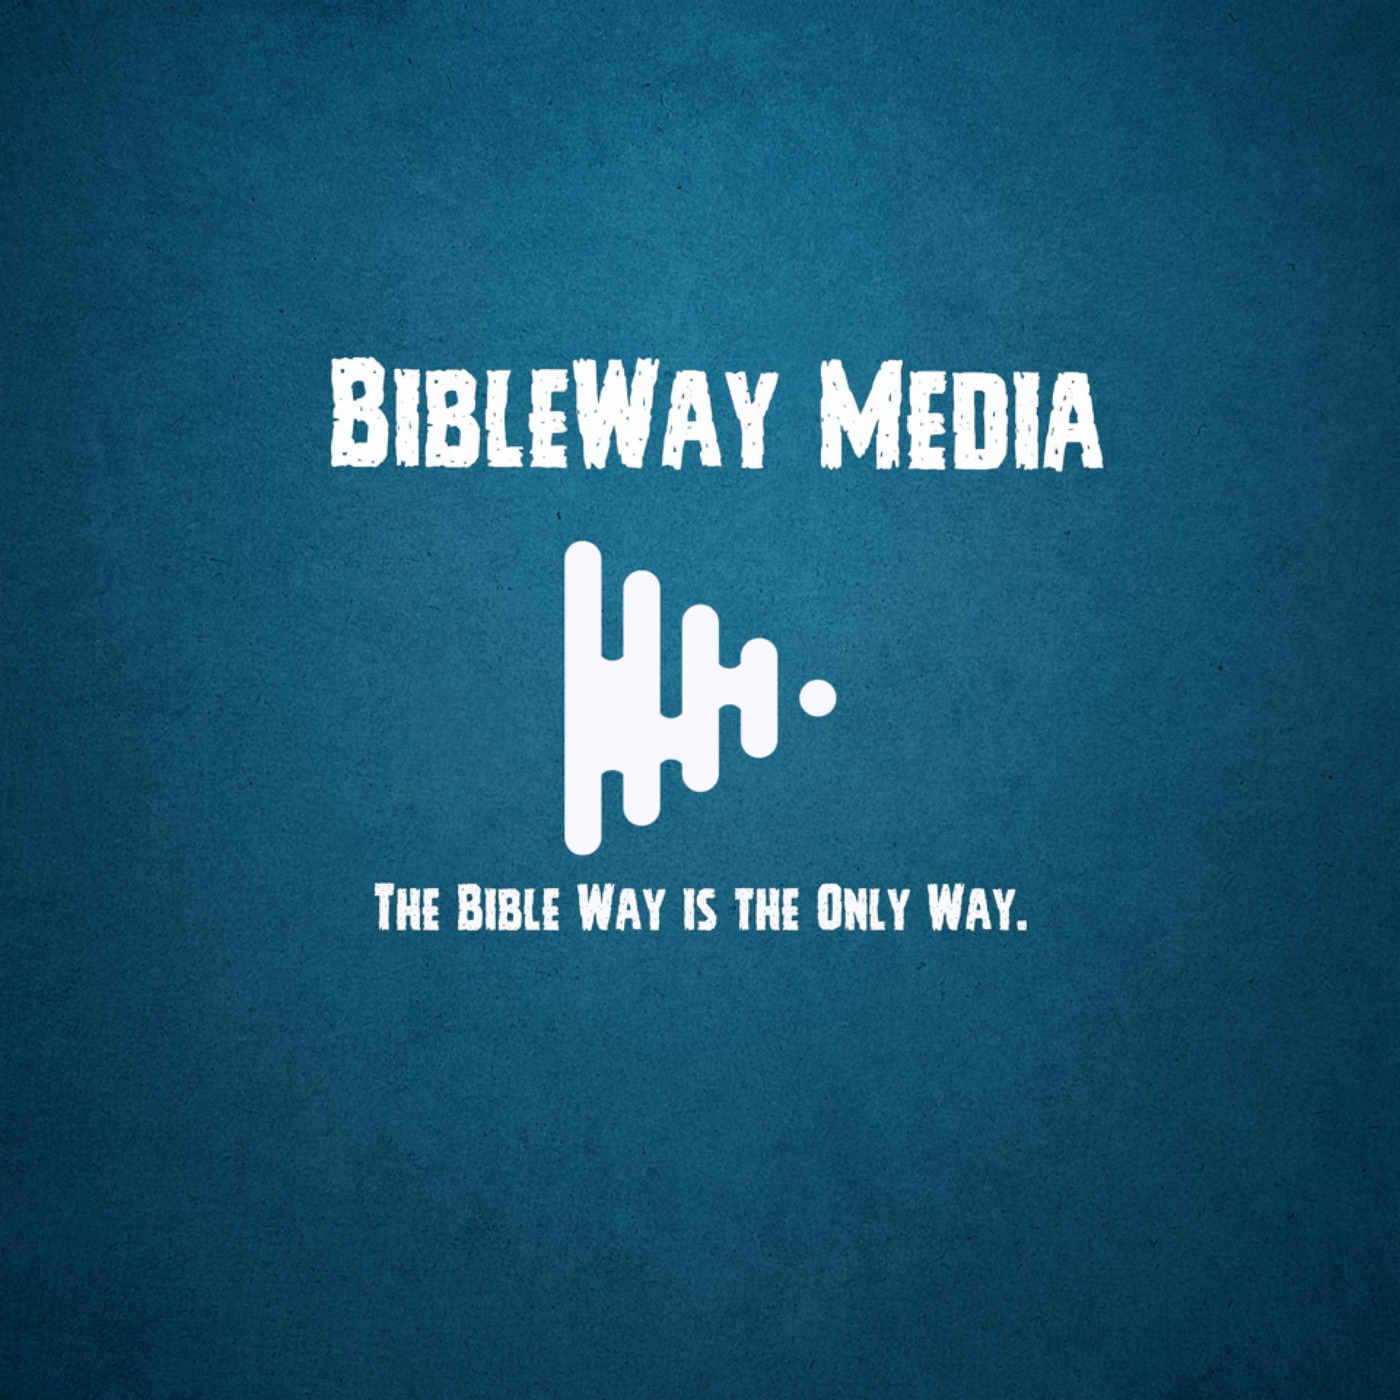 Bibleway Media